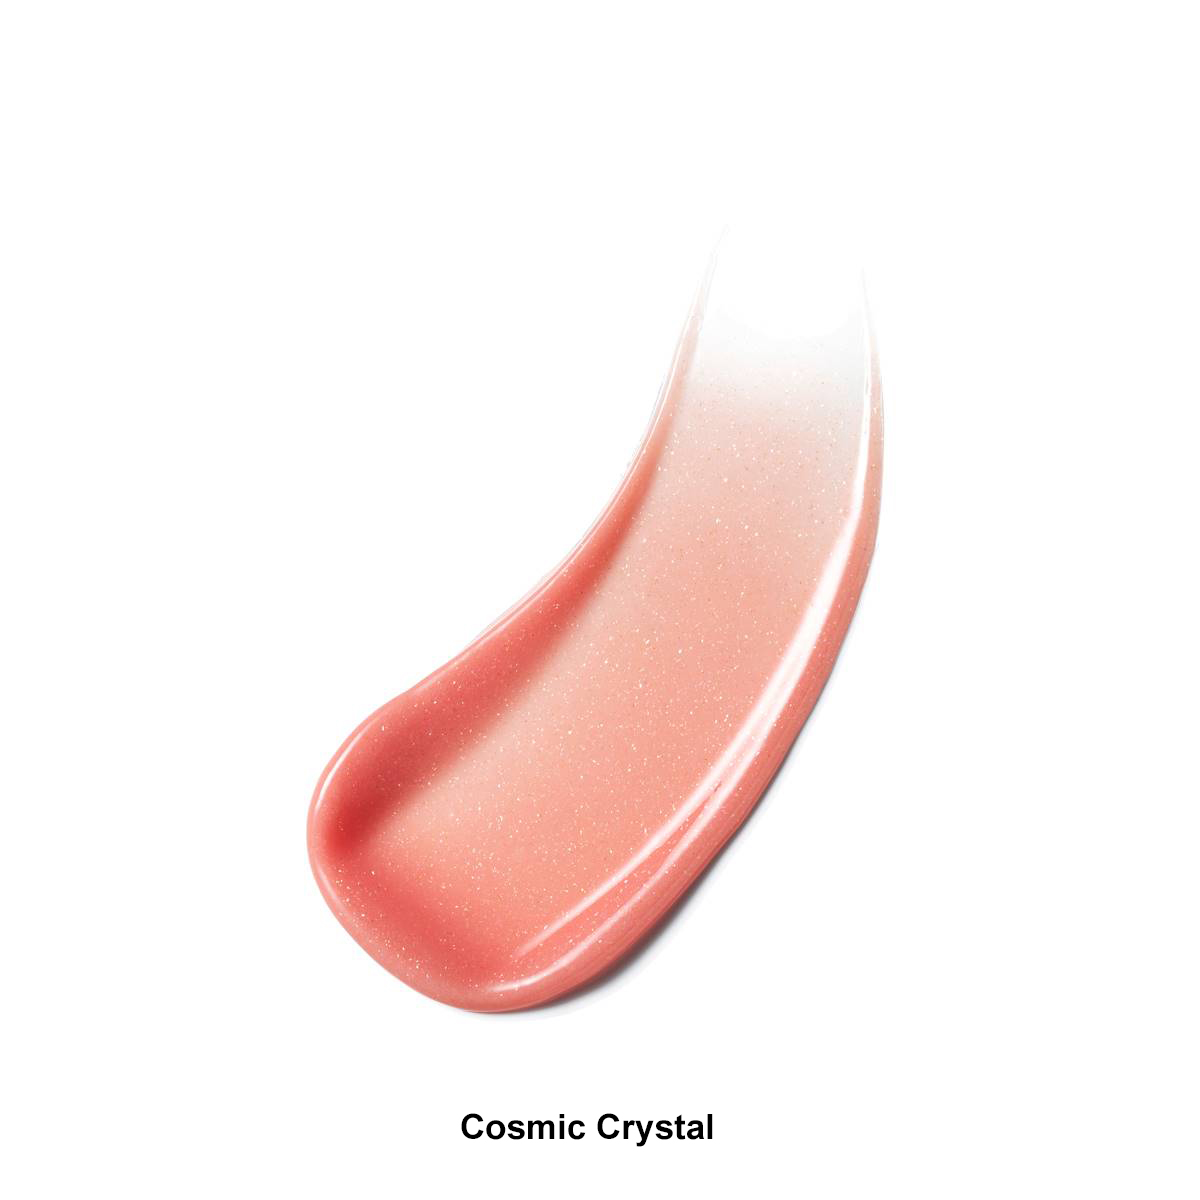 Estee Lauder(tm) Pure Color Envy Crystal Lip Balm